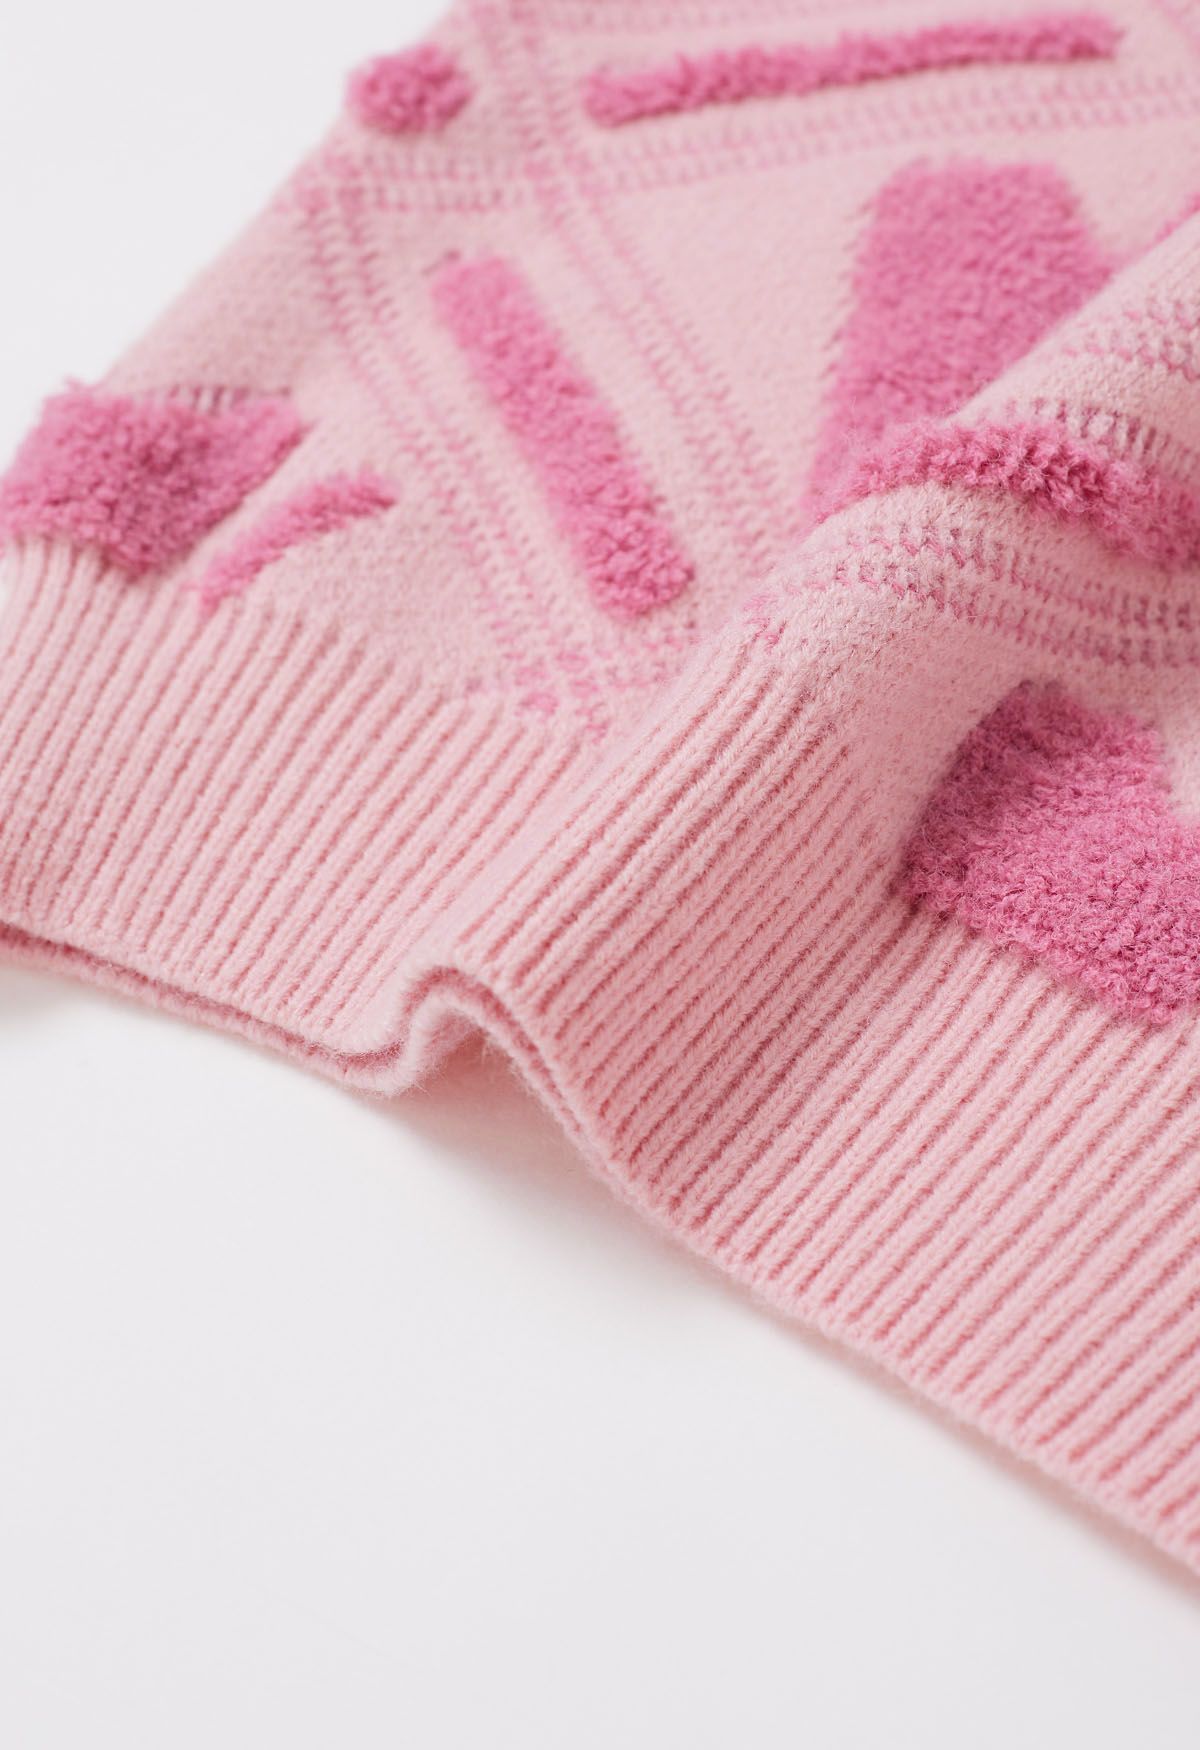 Blushing Love Fuzzy Pink Heart Knit Sweater